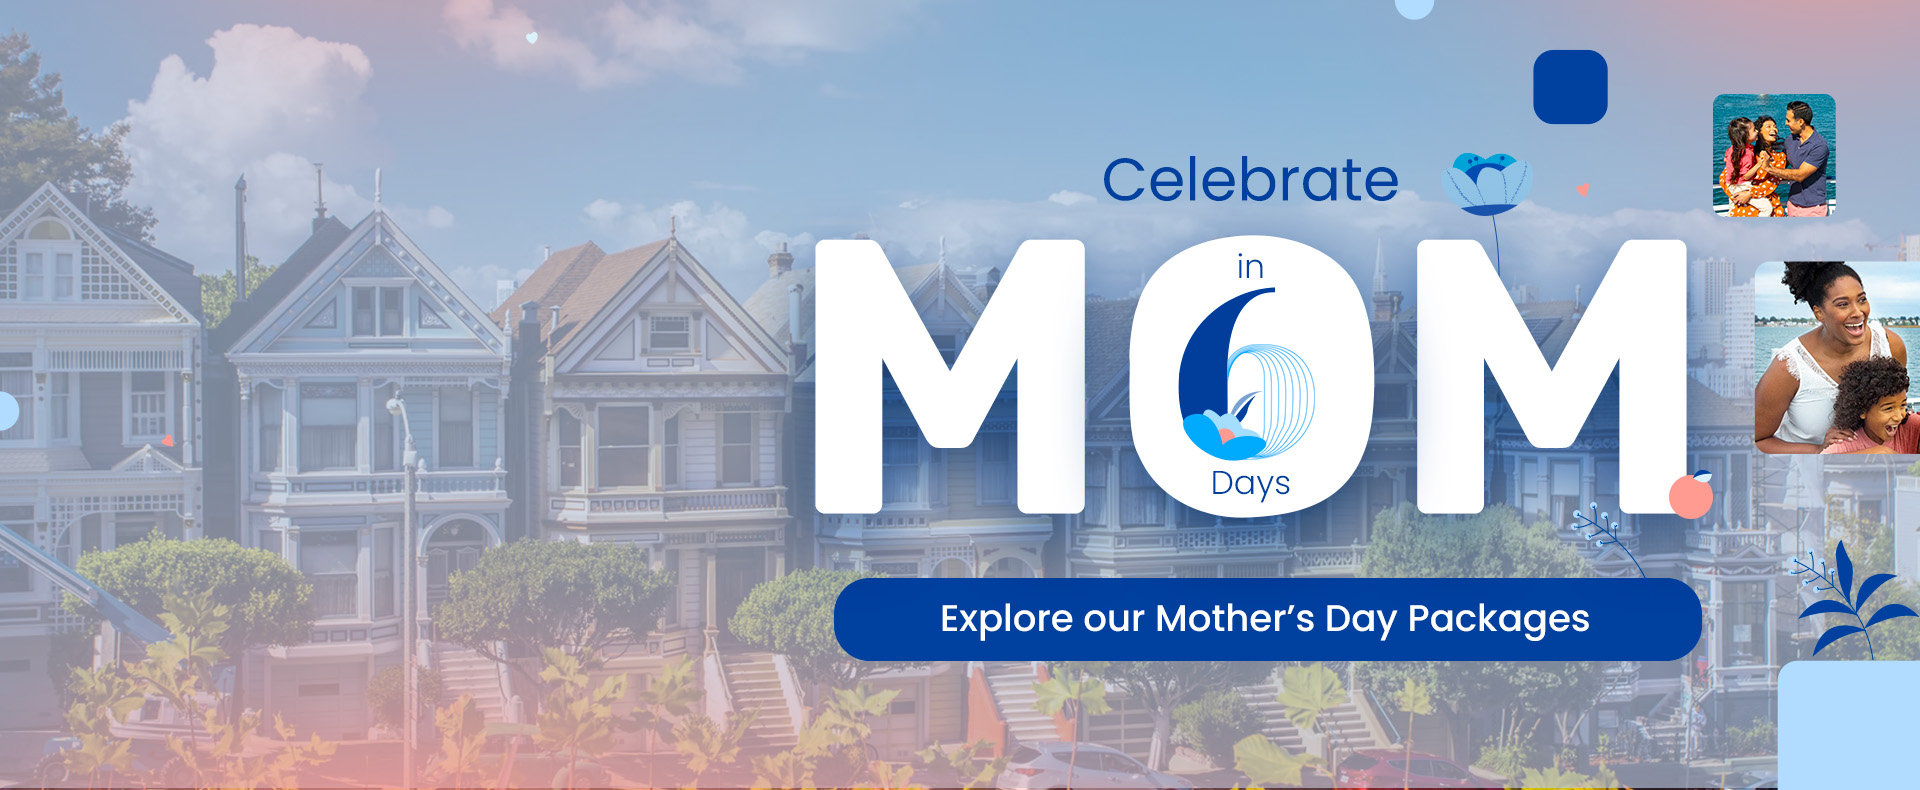 Berkeley Mother’s Day countdown 6 days away